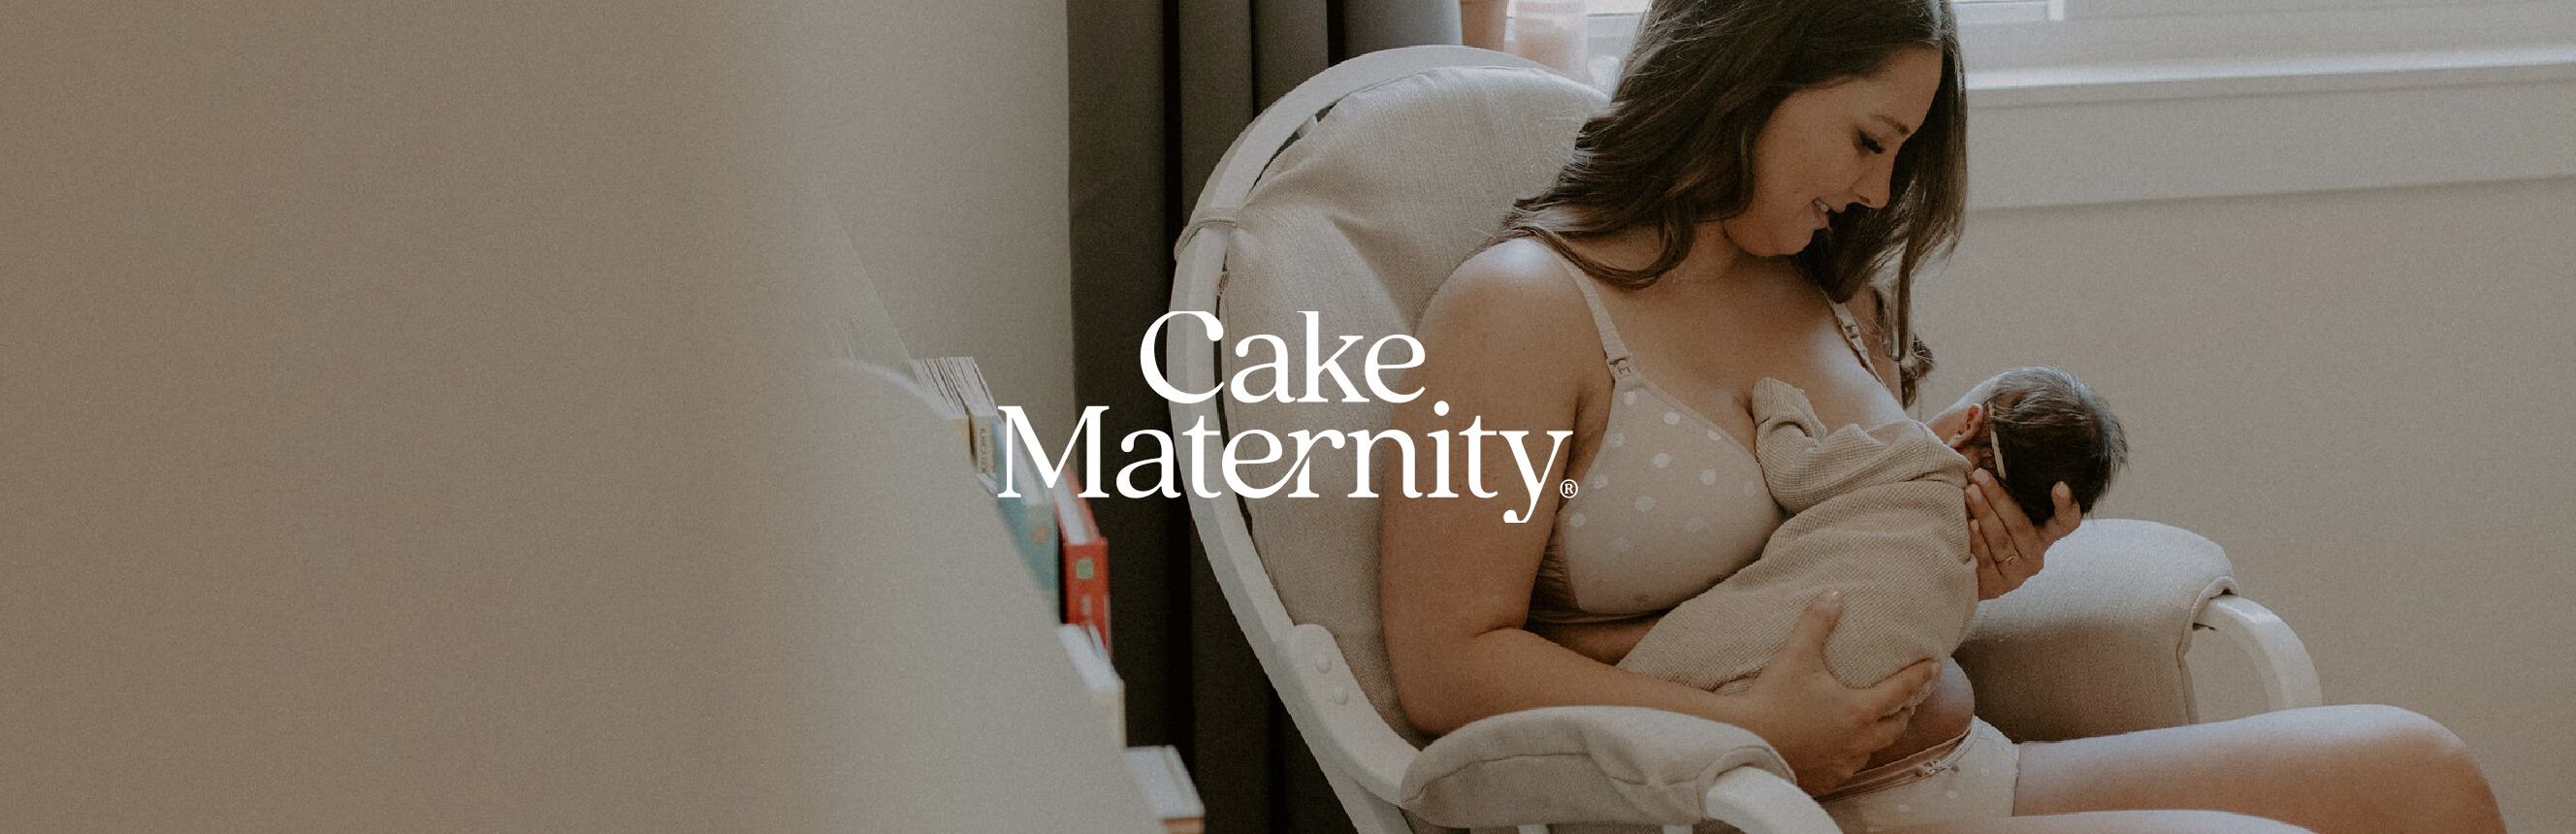 Cake Maternity